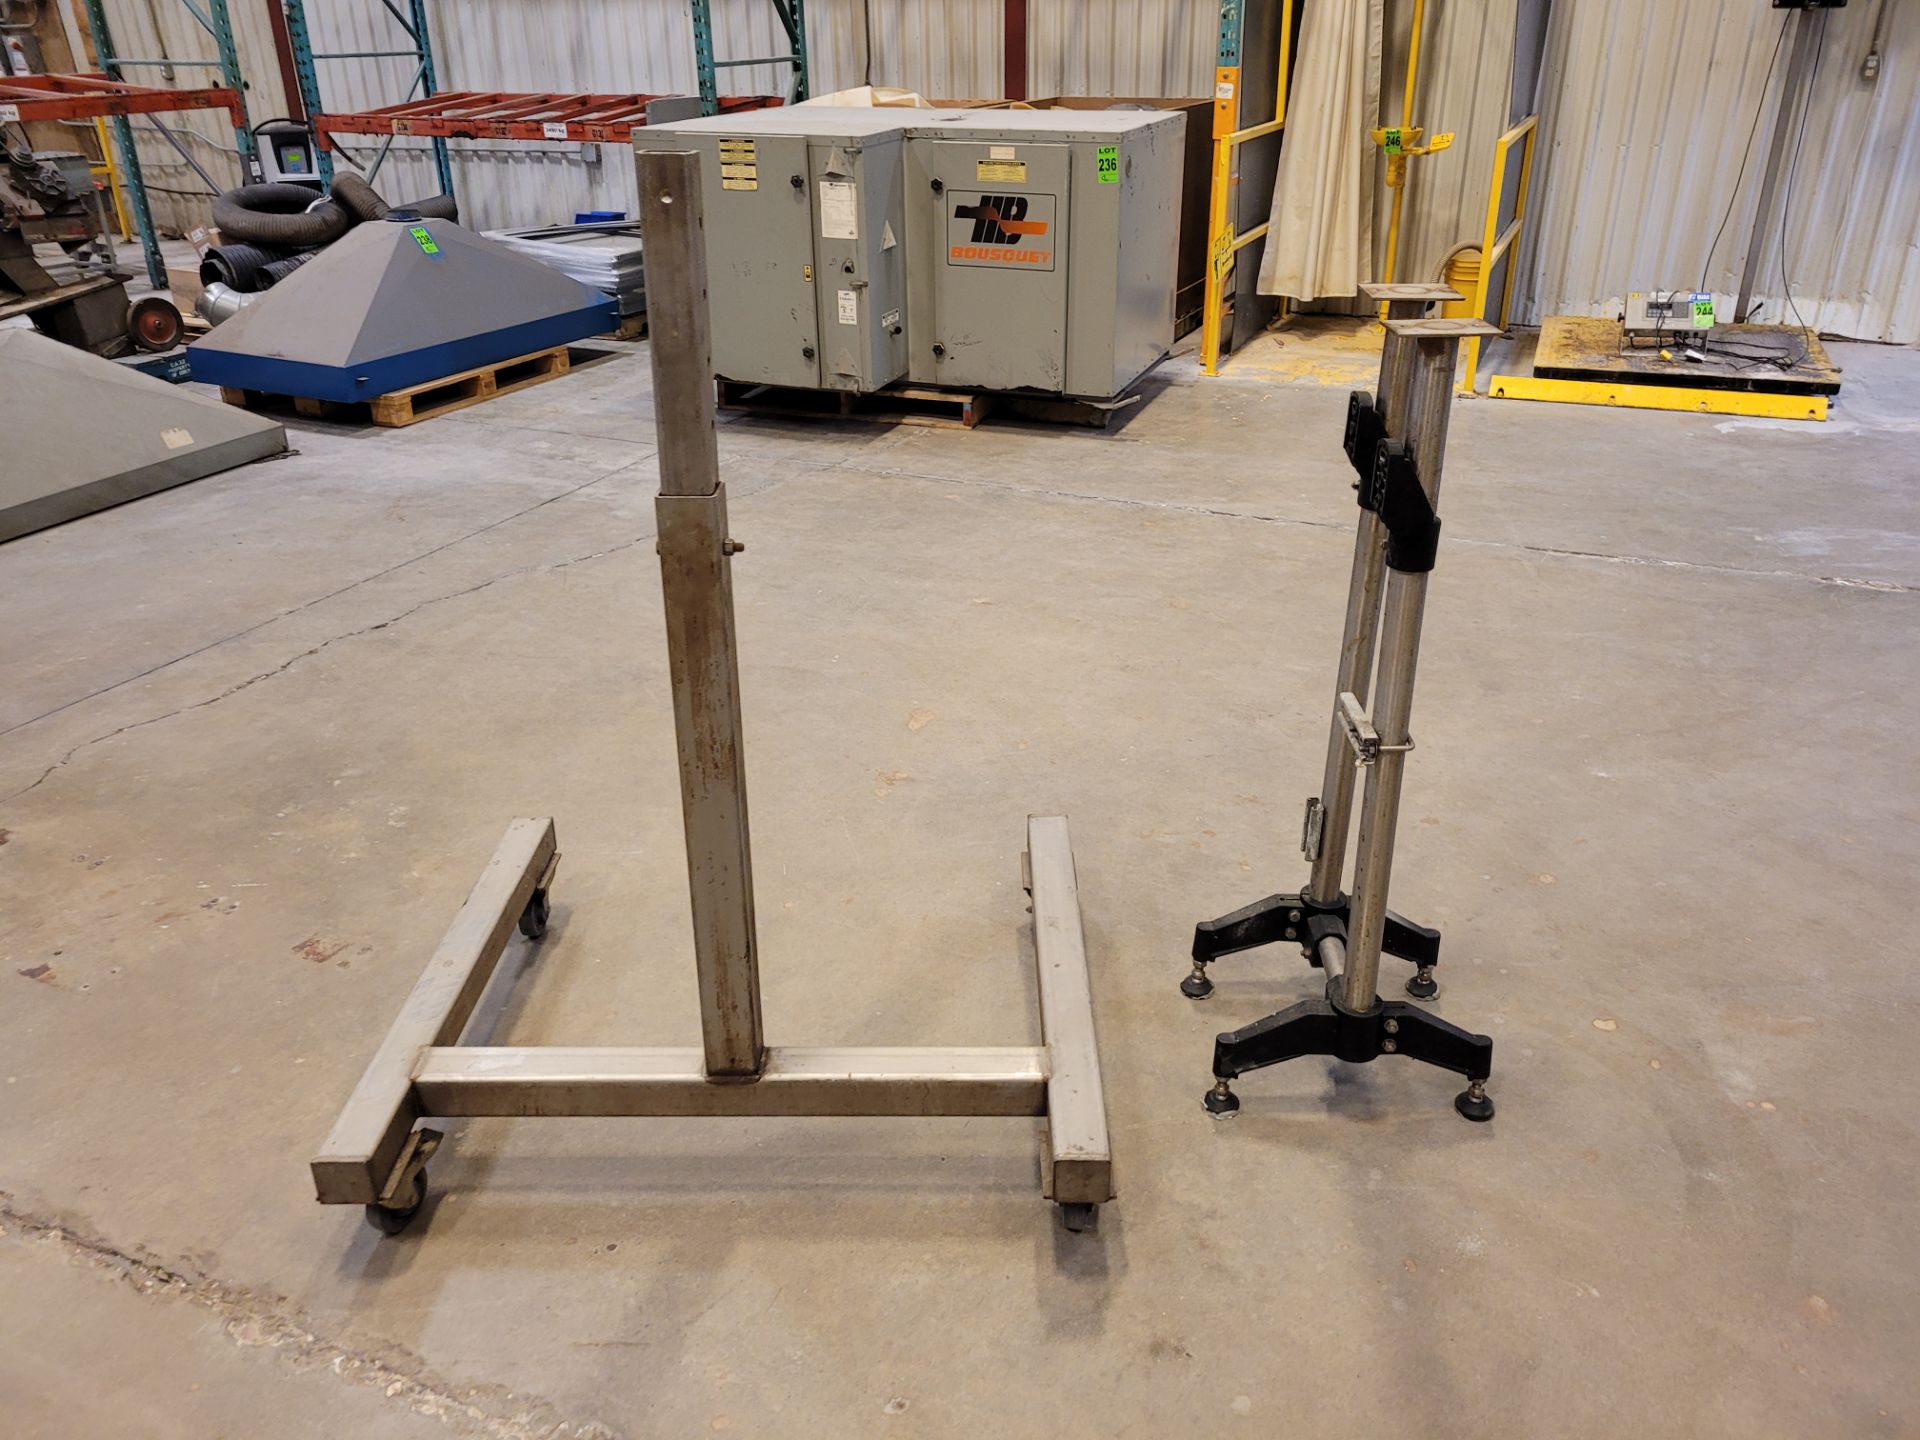 (1) Adjustable mobile stainless steel frame stand, (1) 2-piece adjustable equipment base